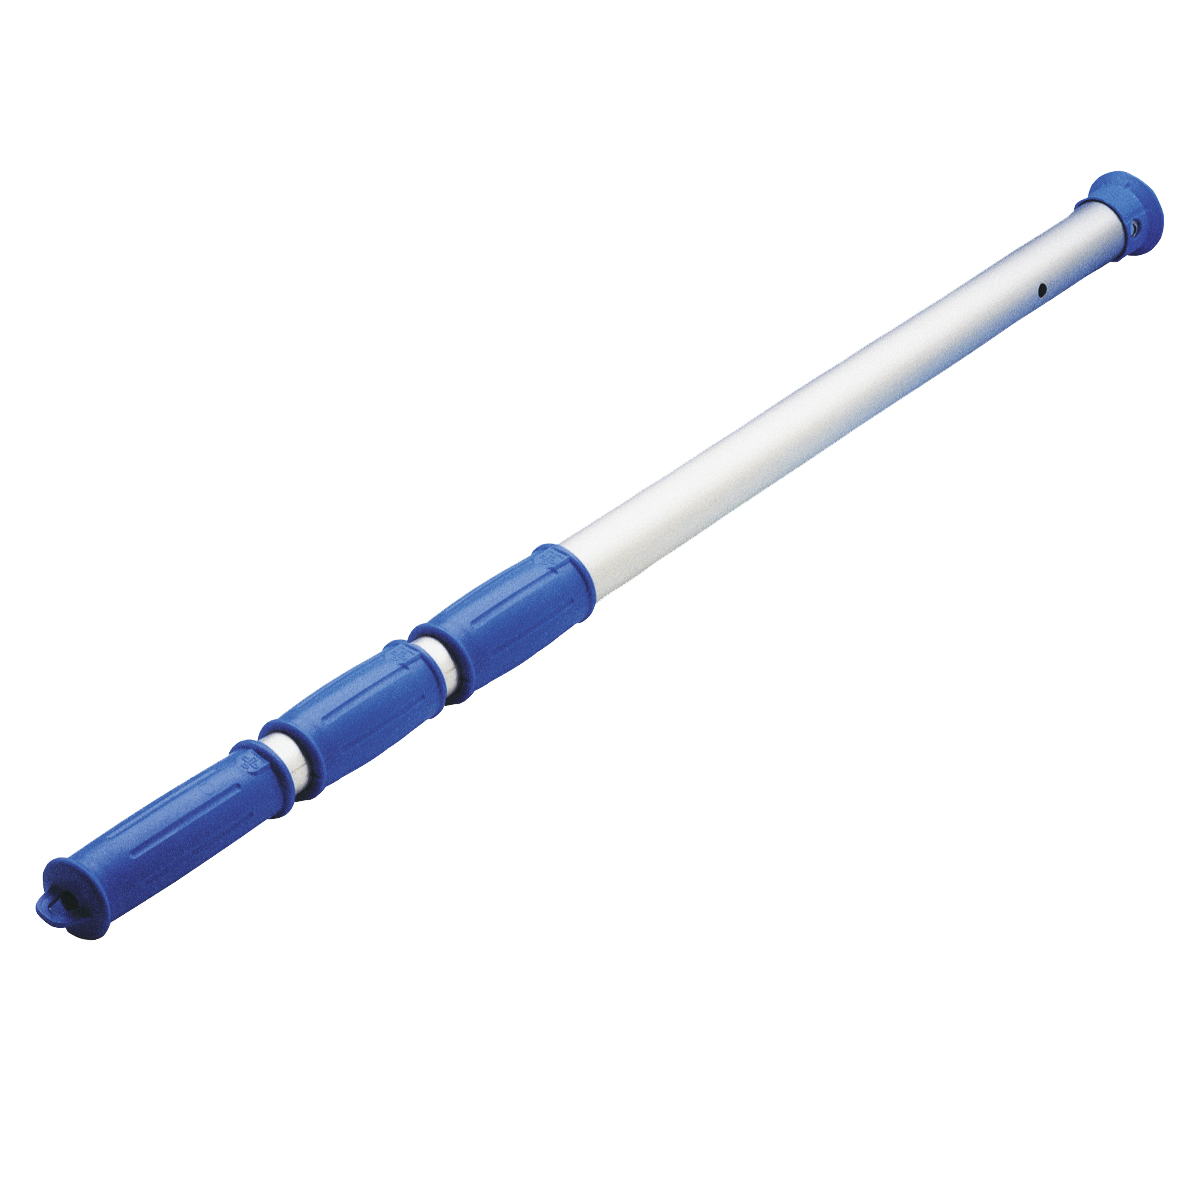 Ocean® telescopic rod 3-parts alu silver anodized 1,1 - 3,3 m Ocean® telescopic rod 3-parts alu silver anodized 1,1 - 3,3 m